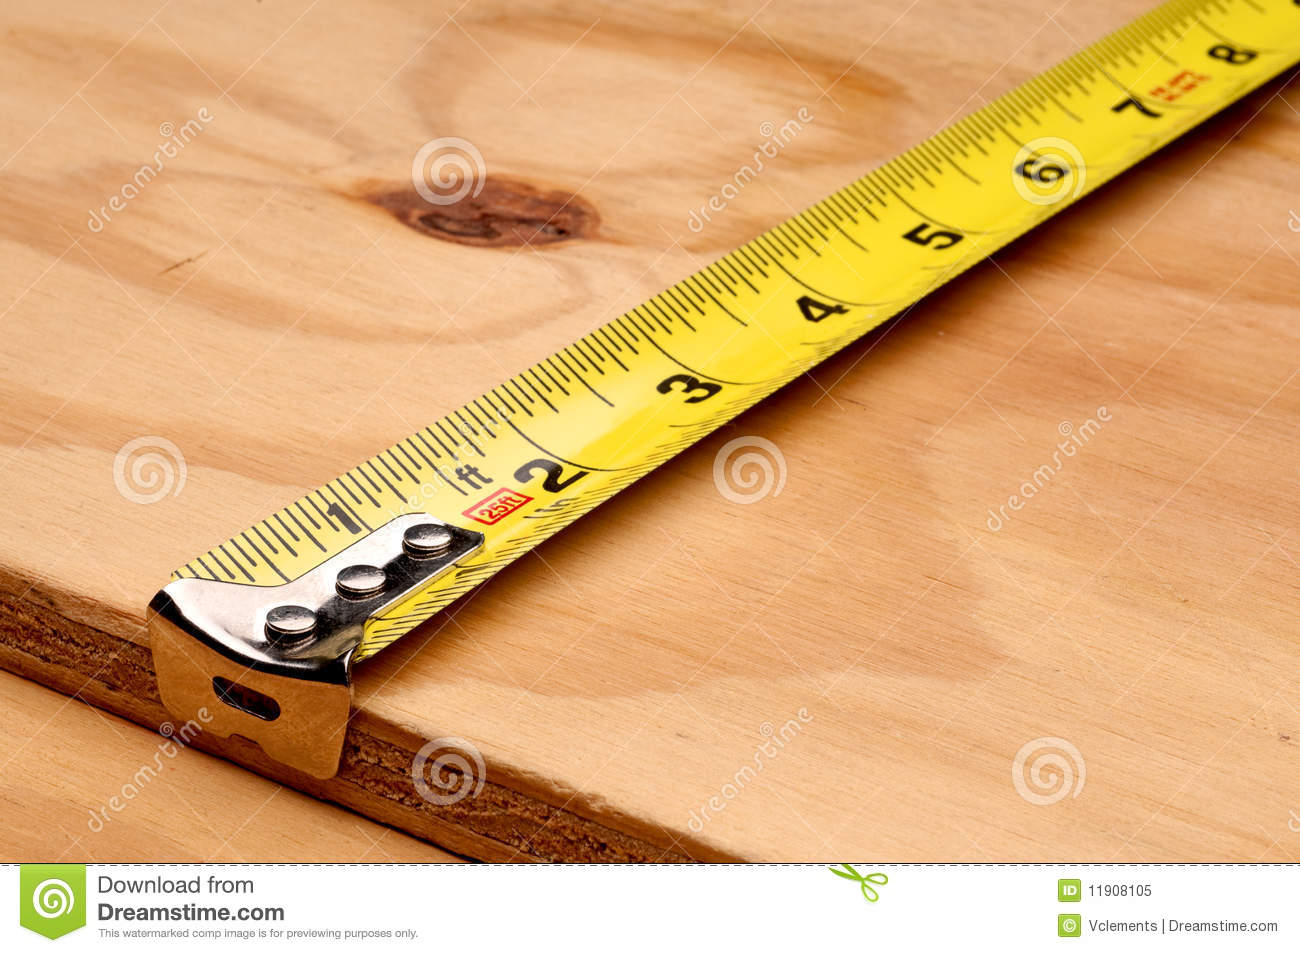 Tape Measure Measuring Wood Royalty Free Stock Photo   Image  11908105